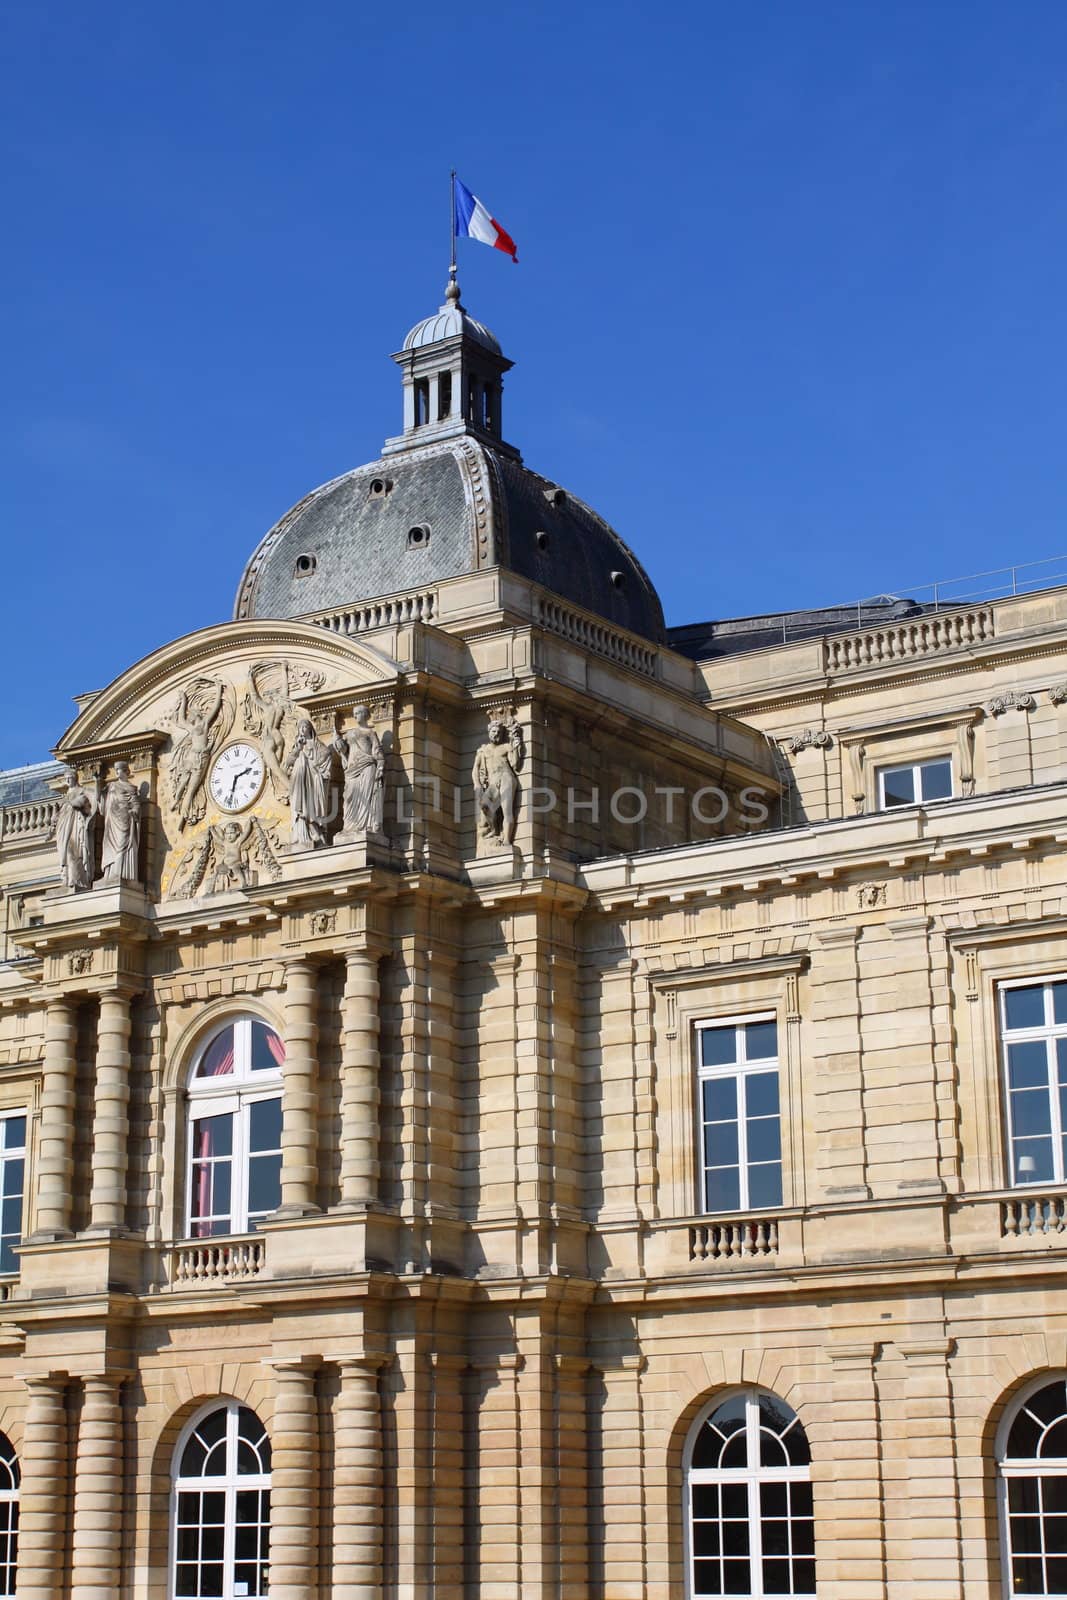 Luxemburg Palace in Paris by mariusz_prusaczyk